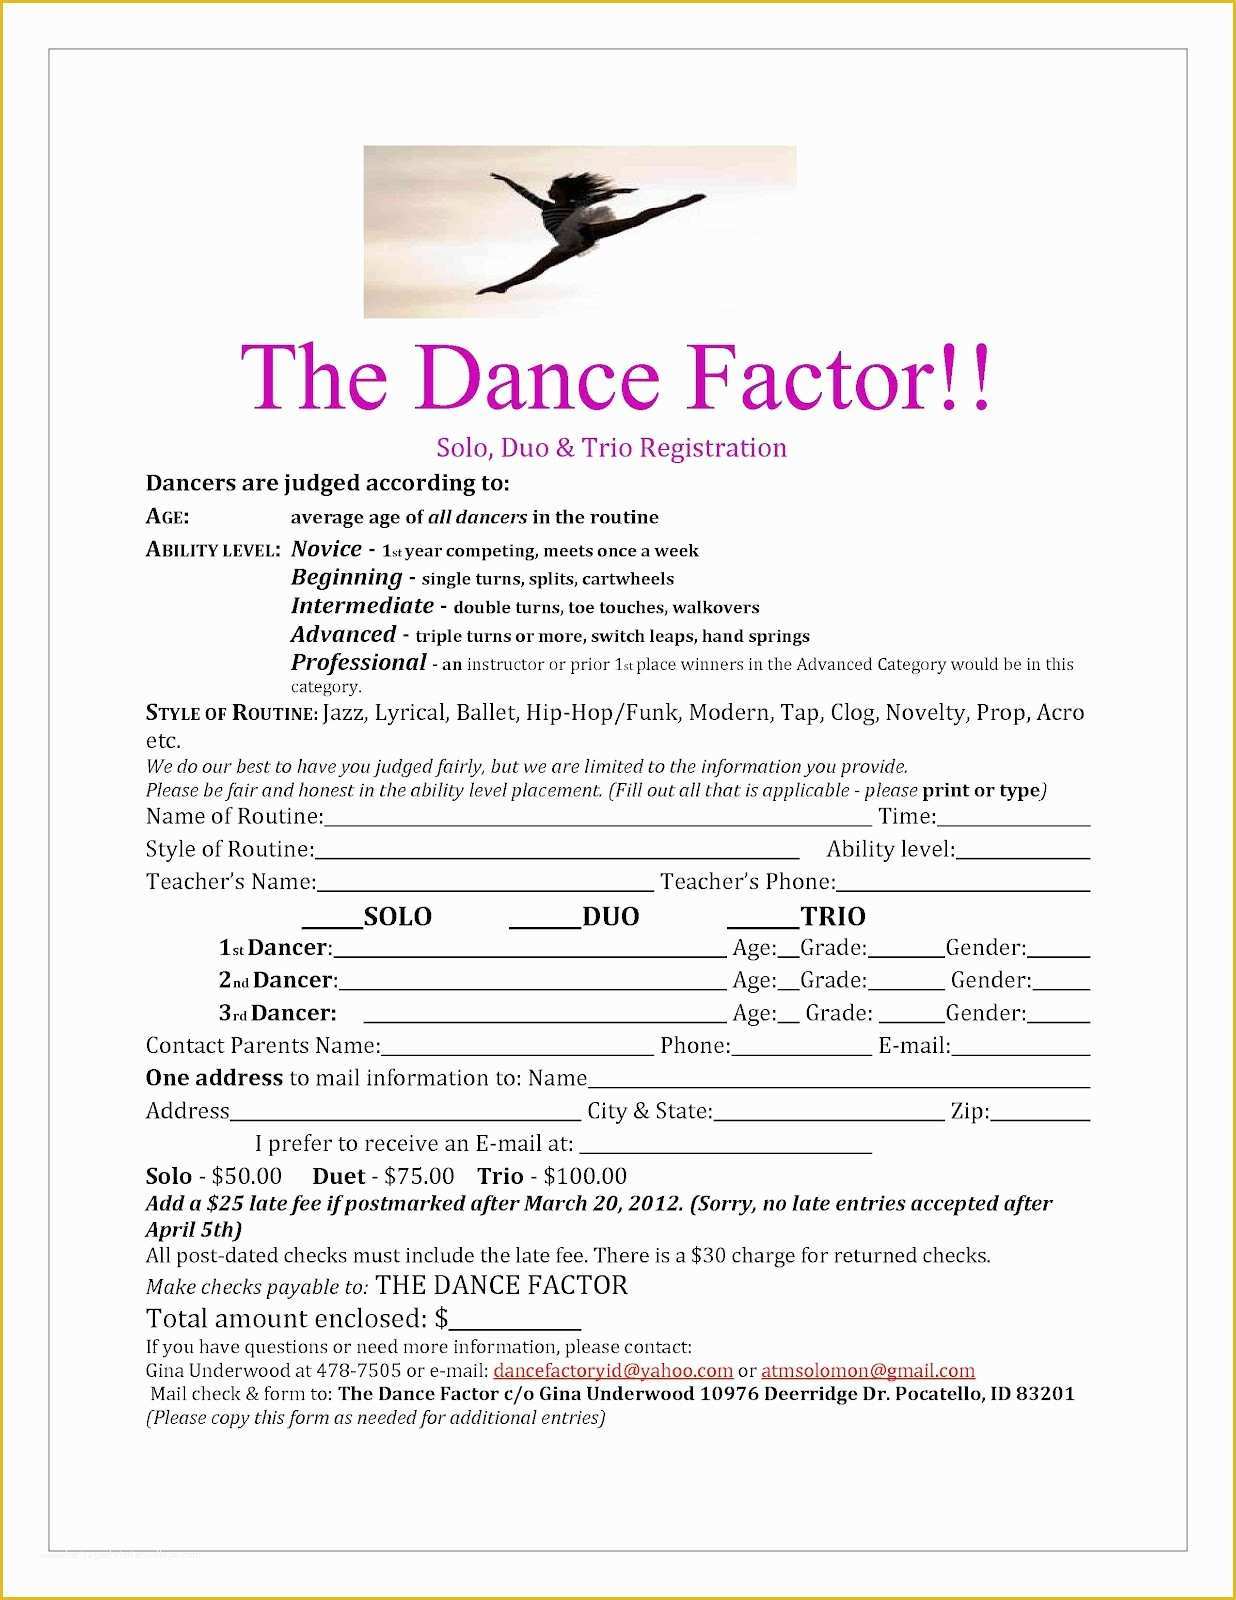 dance-registration-form-template-free-of-eagle-rock-dance-dance-factor